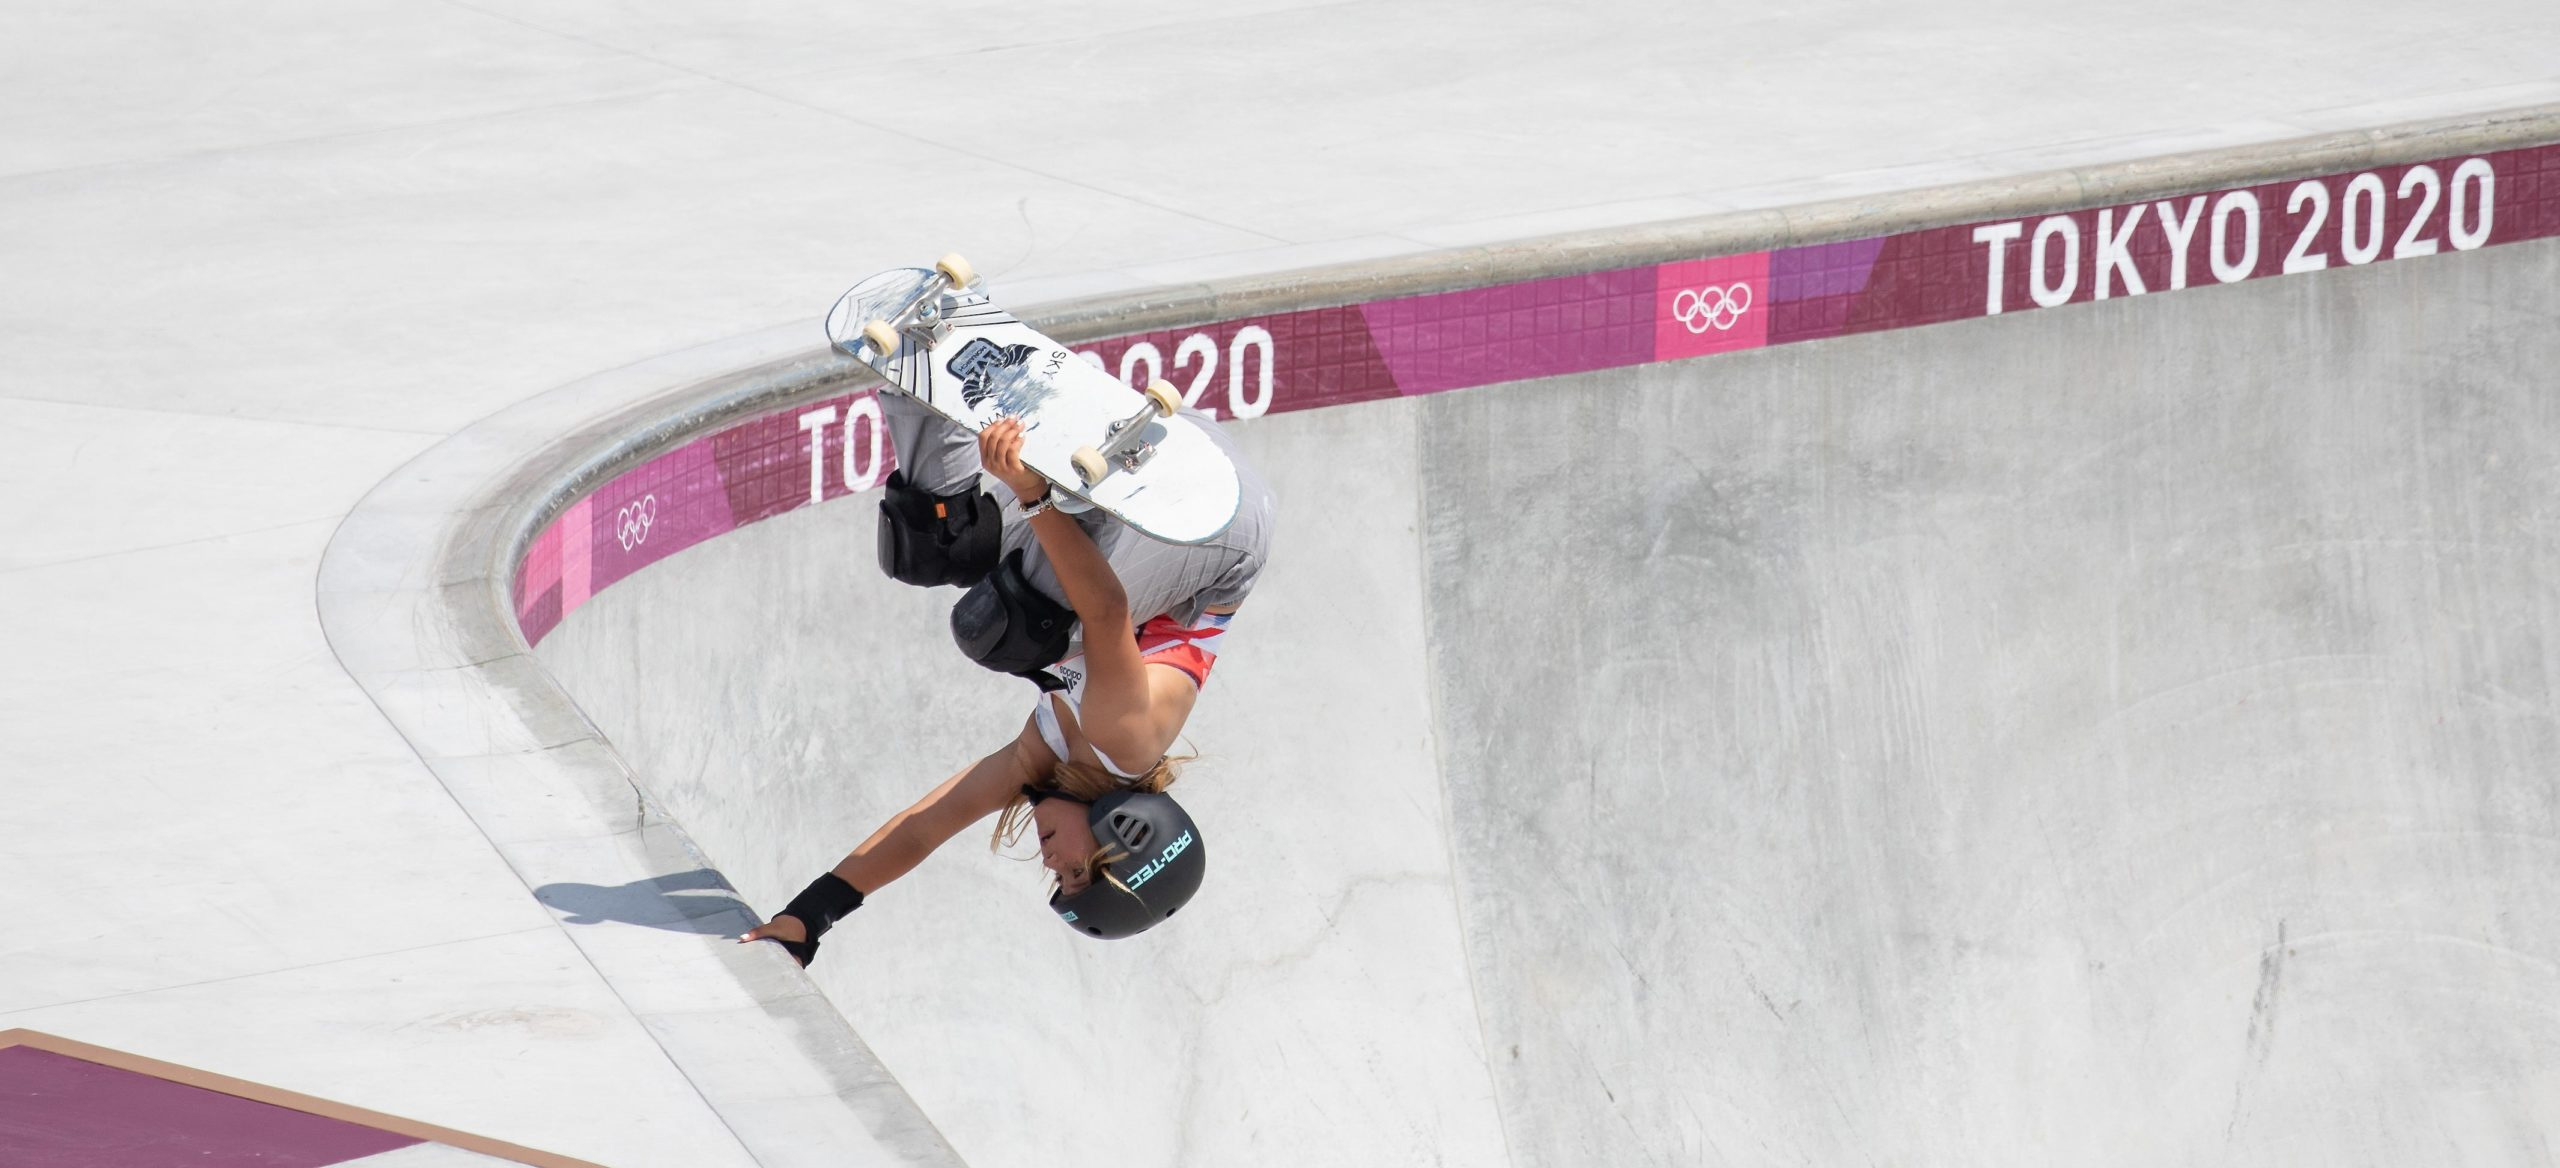 Skateboard GB | Sky Brown | Olympics